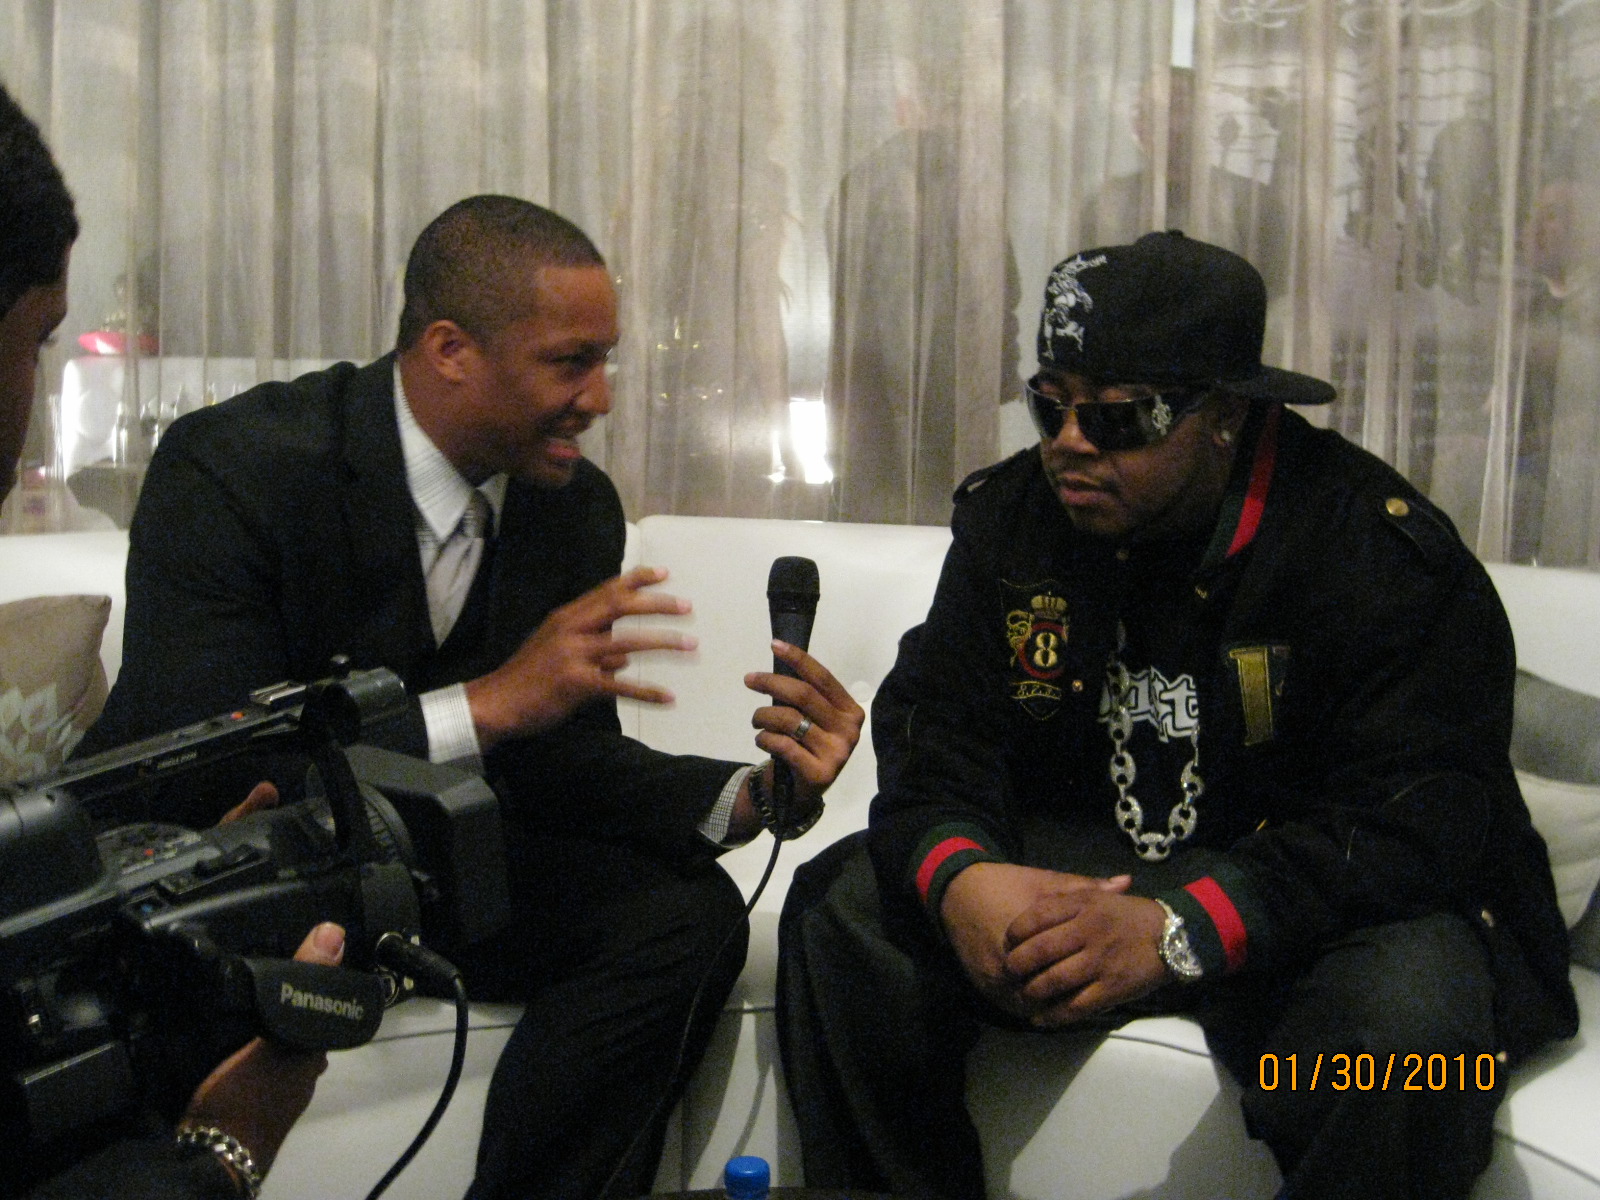 Phillip Marshall Tyler interviewing music artist Twista during the Grammy Awards